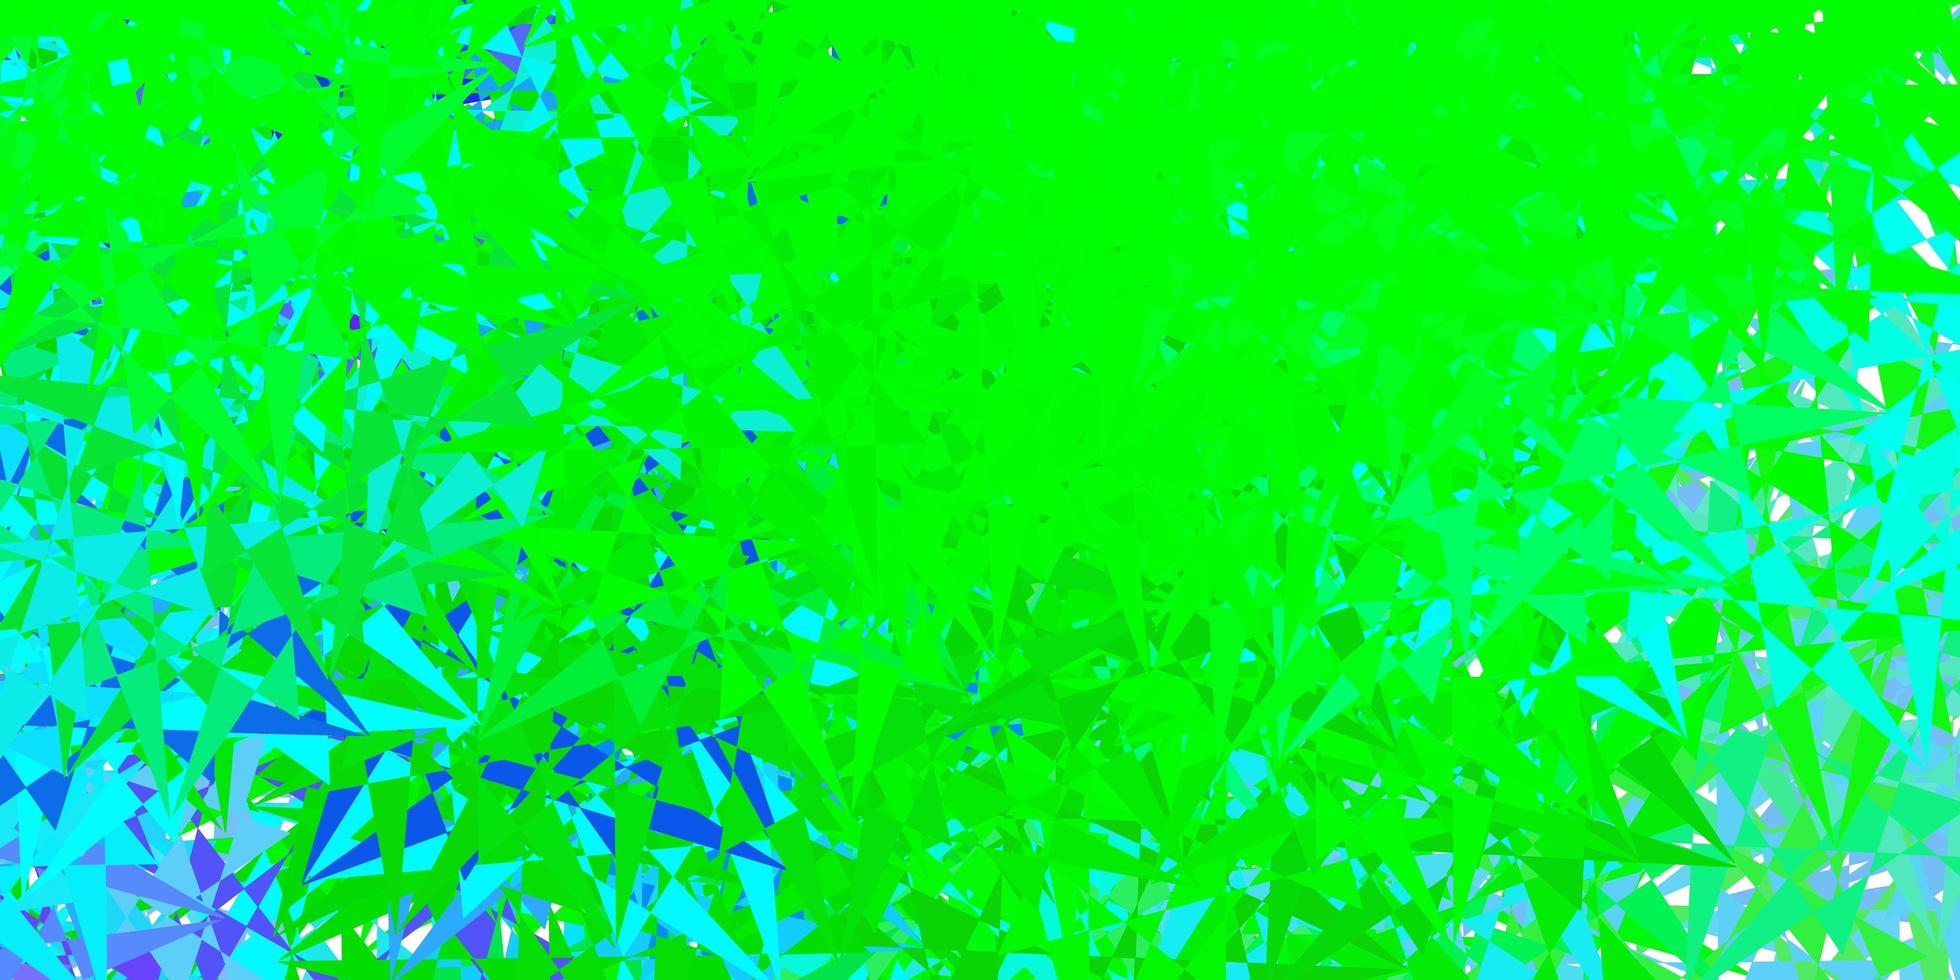 ljusrosa, grön vektorbakgrund med polygonala former. vektor